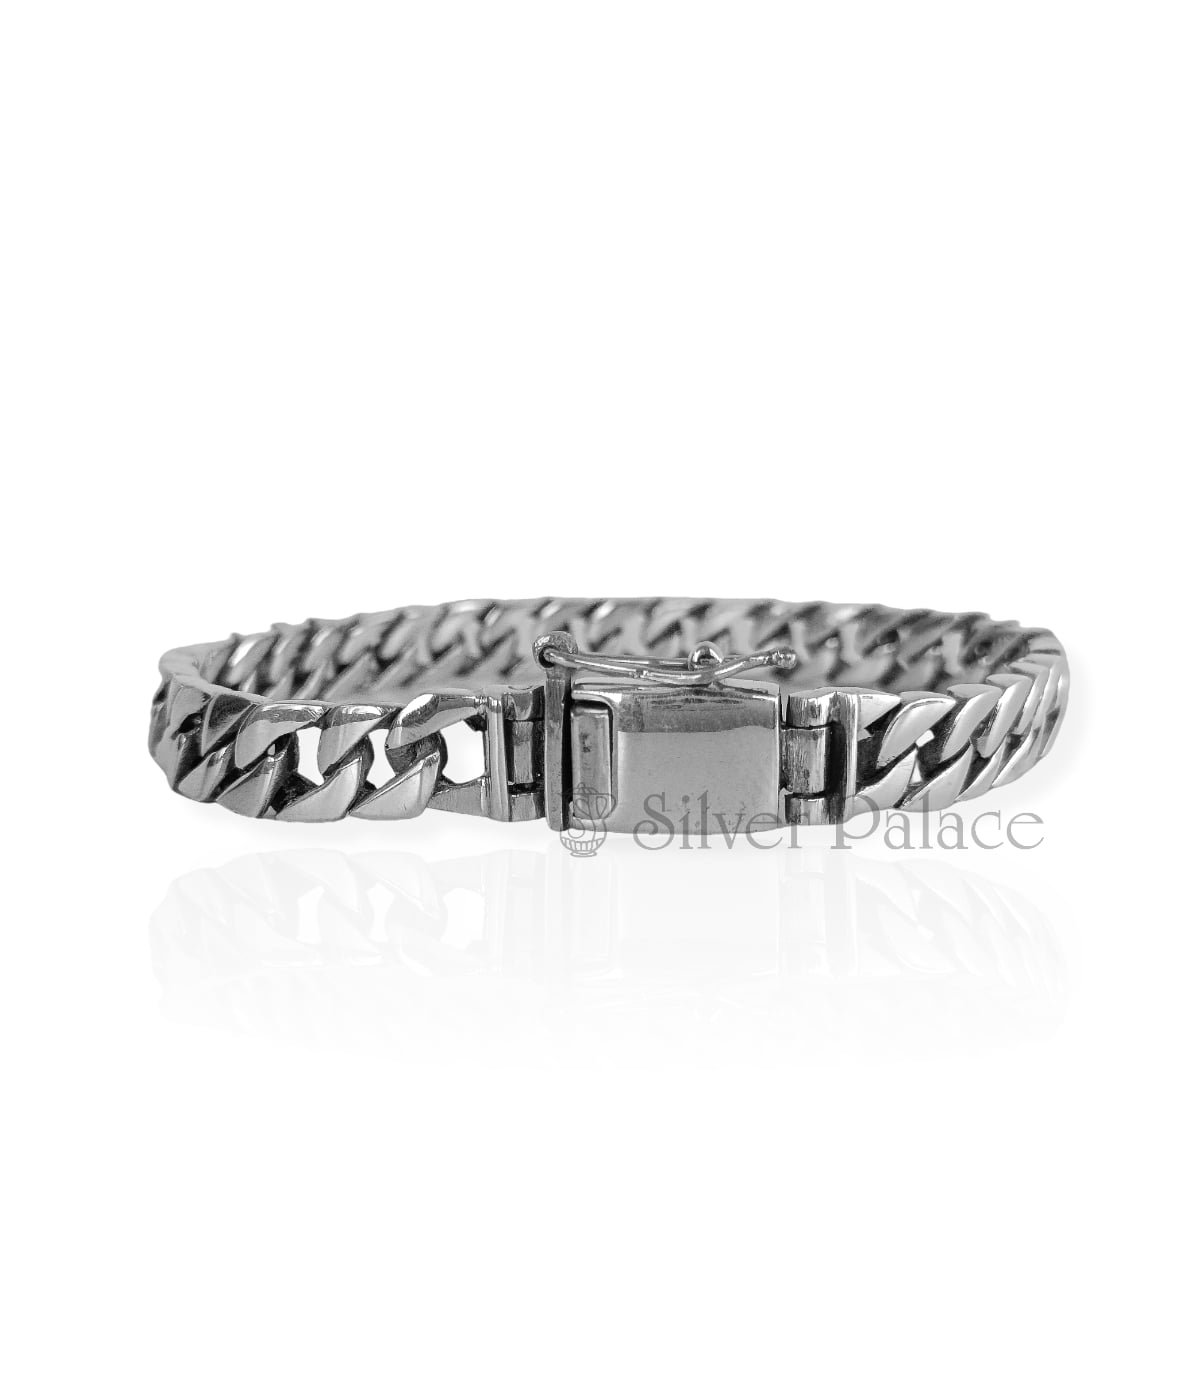 Sterling Silver Chain Design Bracelet For Men  Silver Palace